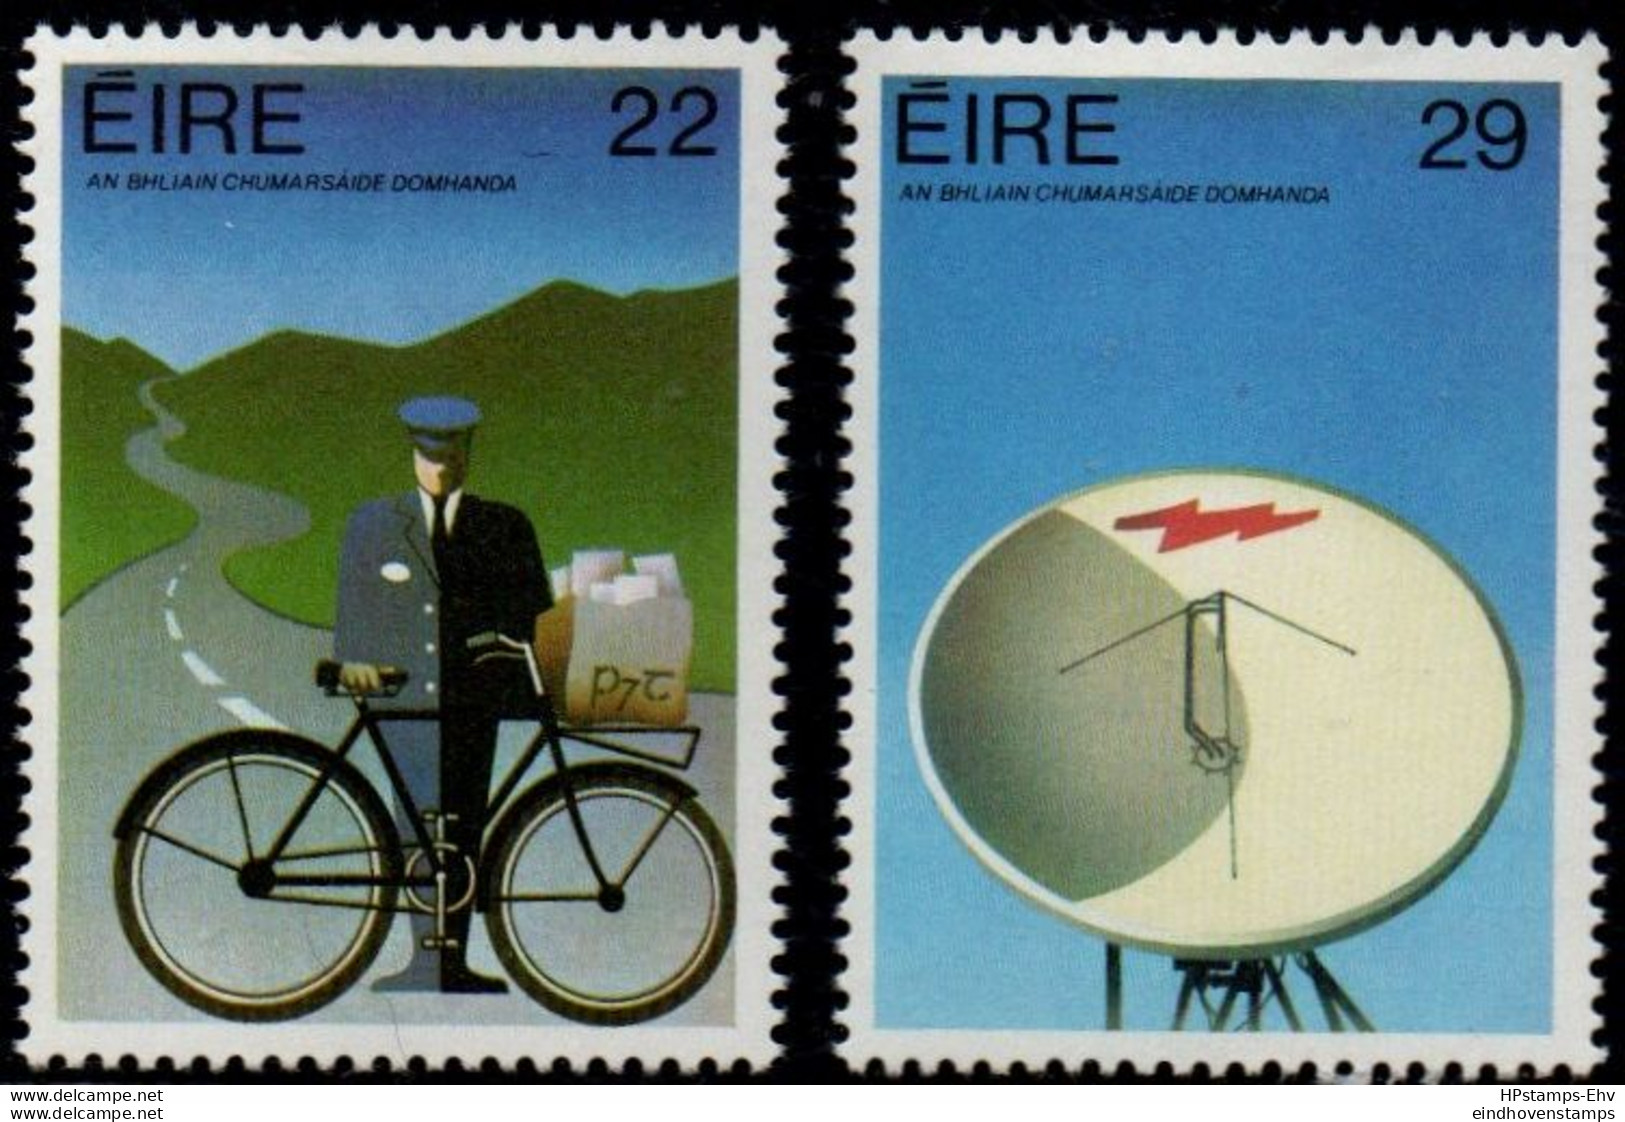 Eire 1983 World Communication Day 2 ValuesMNH 2209.3002 Mailman With Bike, Parabole Antenna, Telecom - Poste